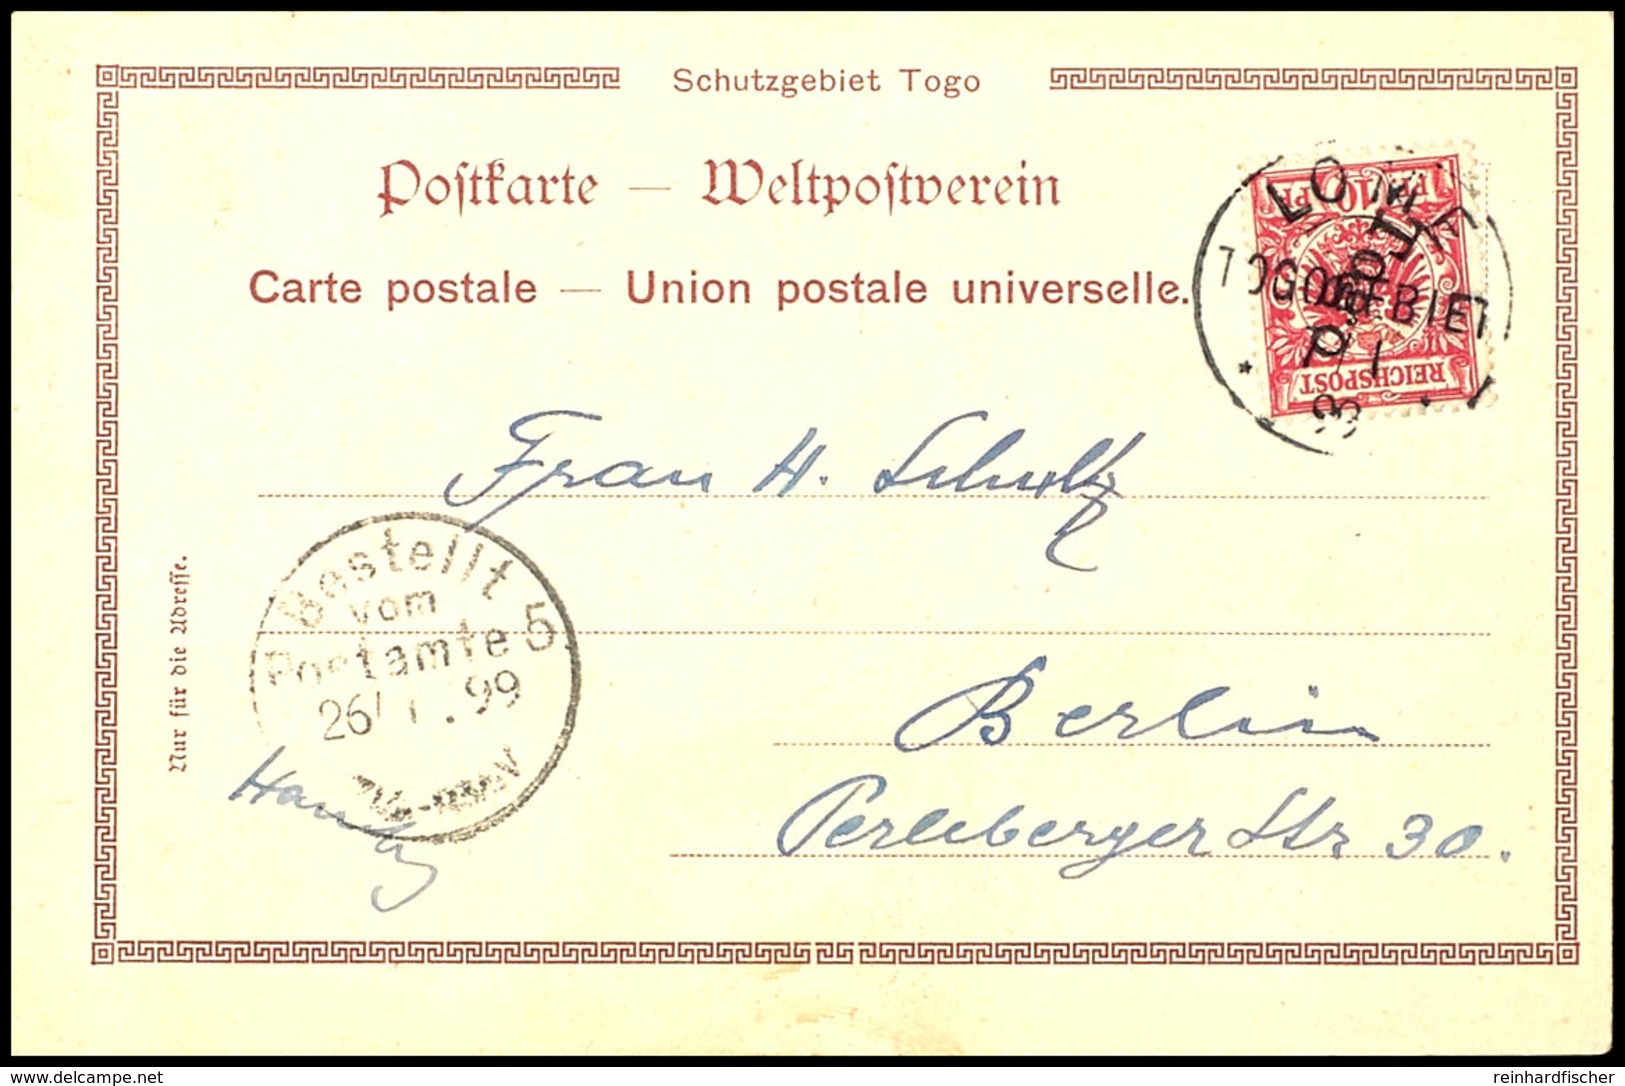 10 Pfg. Rot, Gestempelt "LOME 7/1 99" Auf Ansichtskarte Nach Berlin Mit Ankunftsstempel, Katalog: 9 BF - Togo